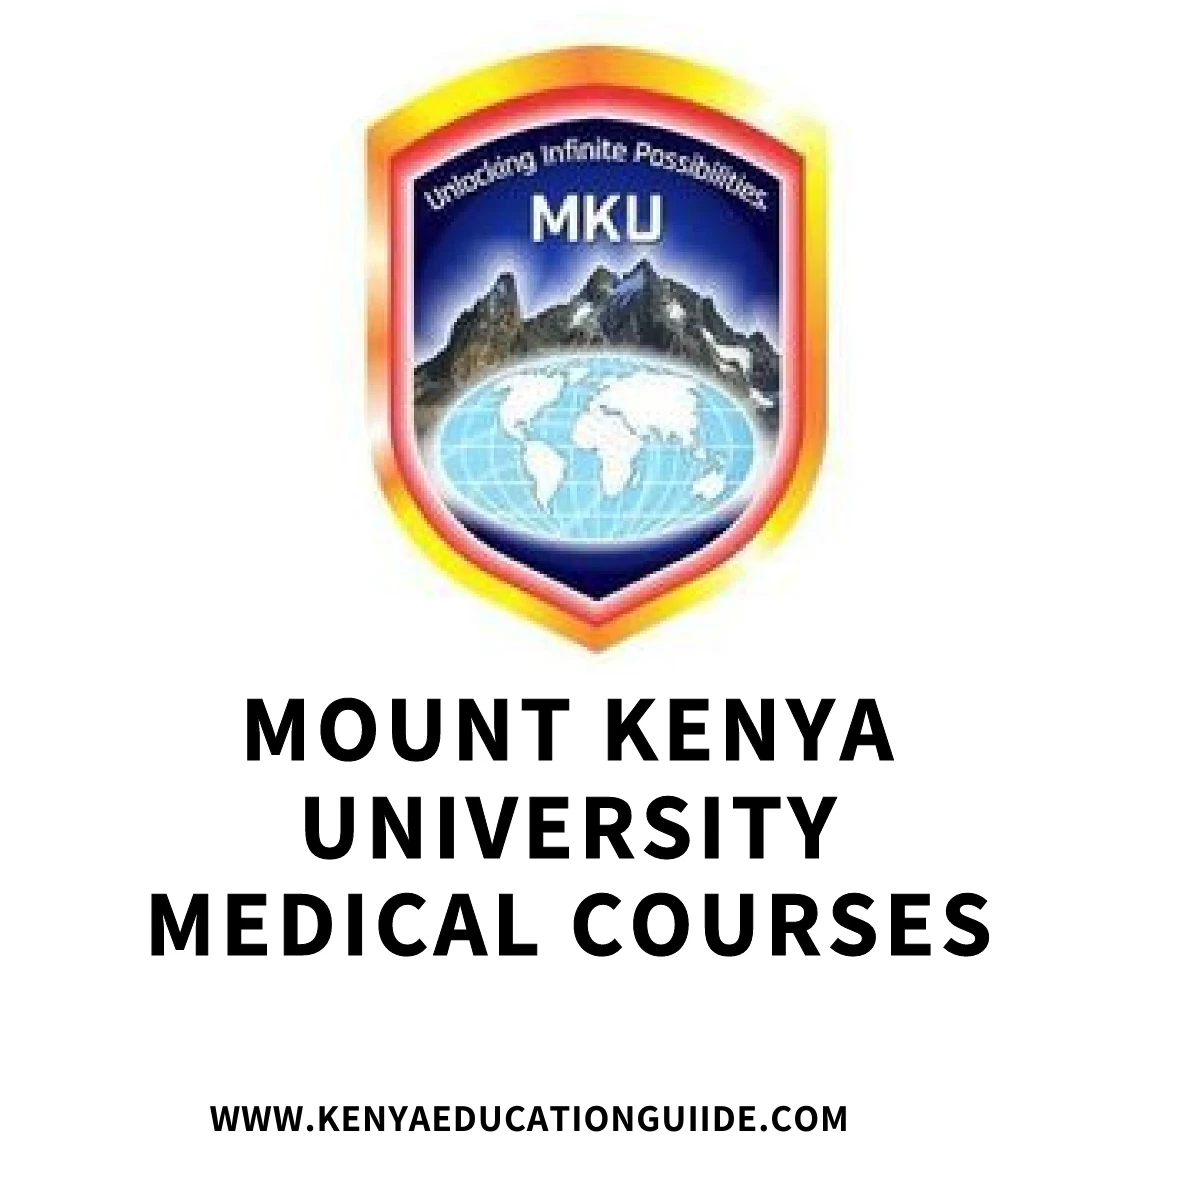 Mount Kenya University Medical Courses